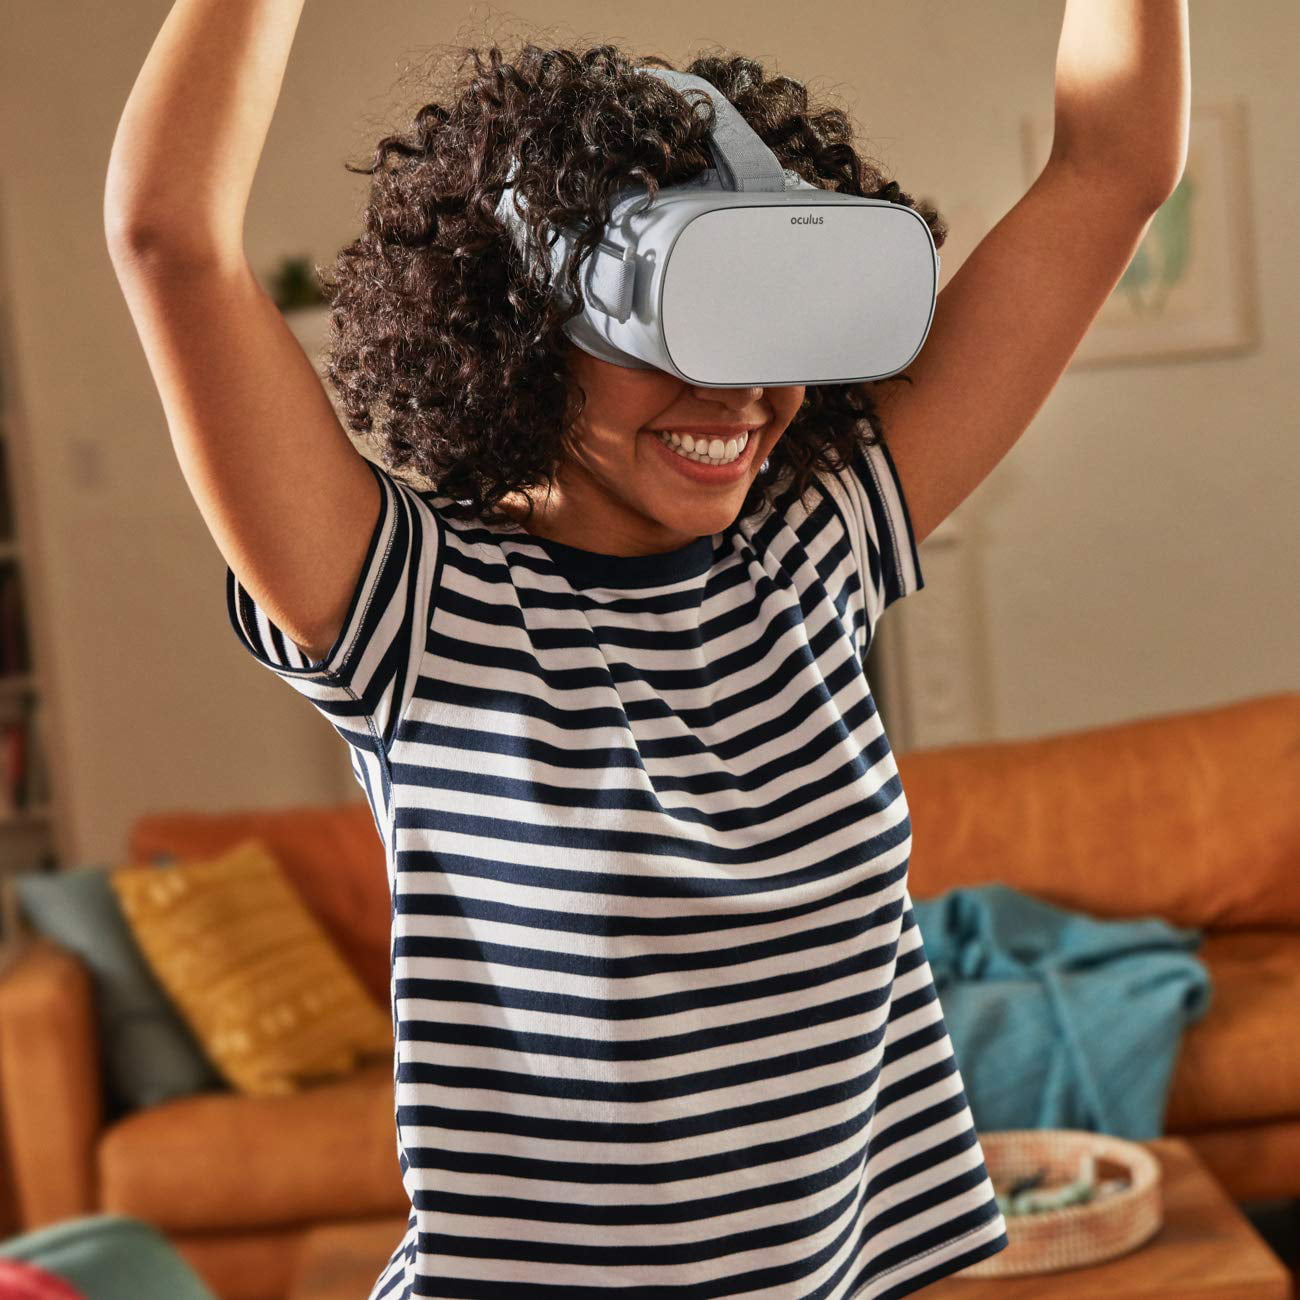 Restored Oculus Go Standalone Virtual Reality Headset 32GB Gray Bluetooth  (Refurbished) - Walmart.com